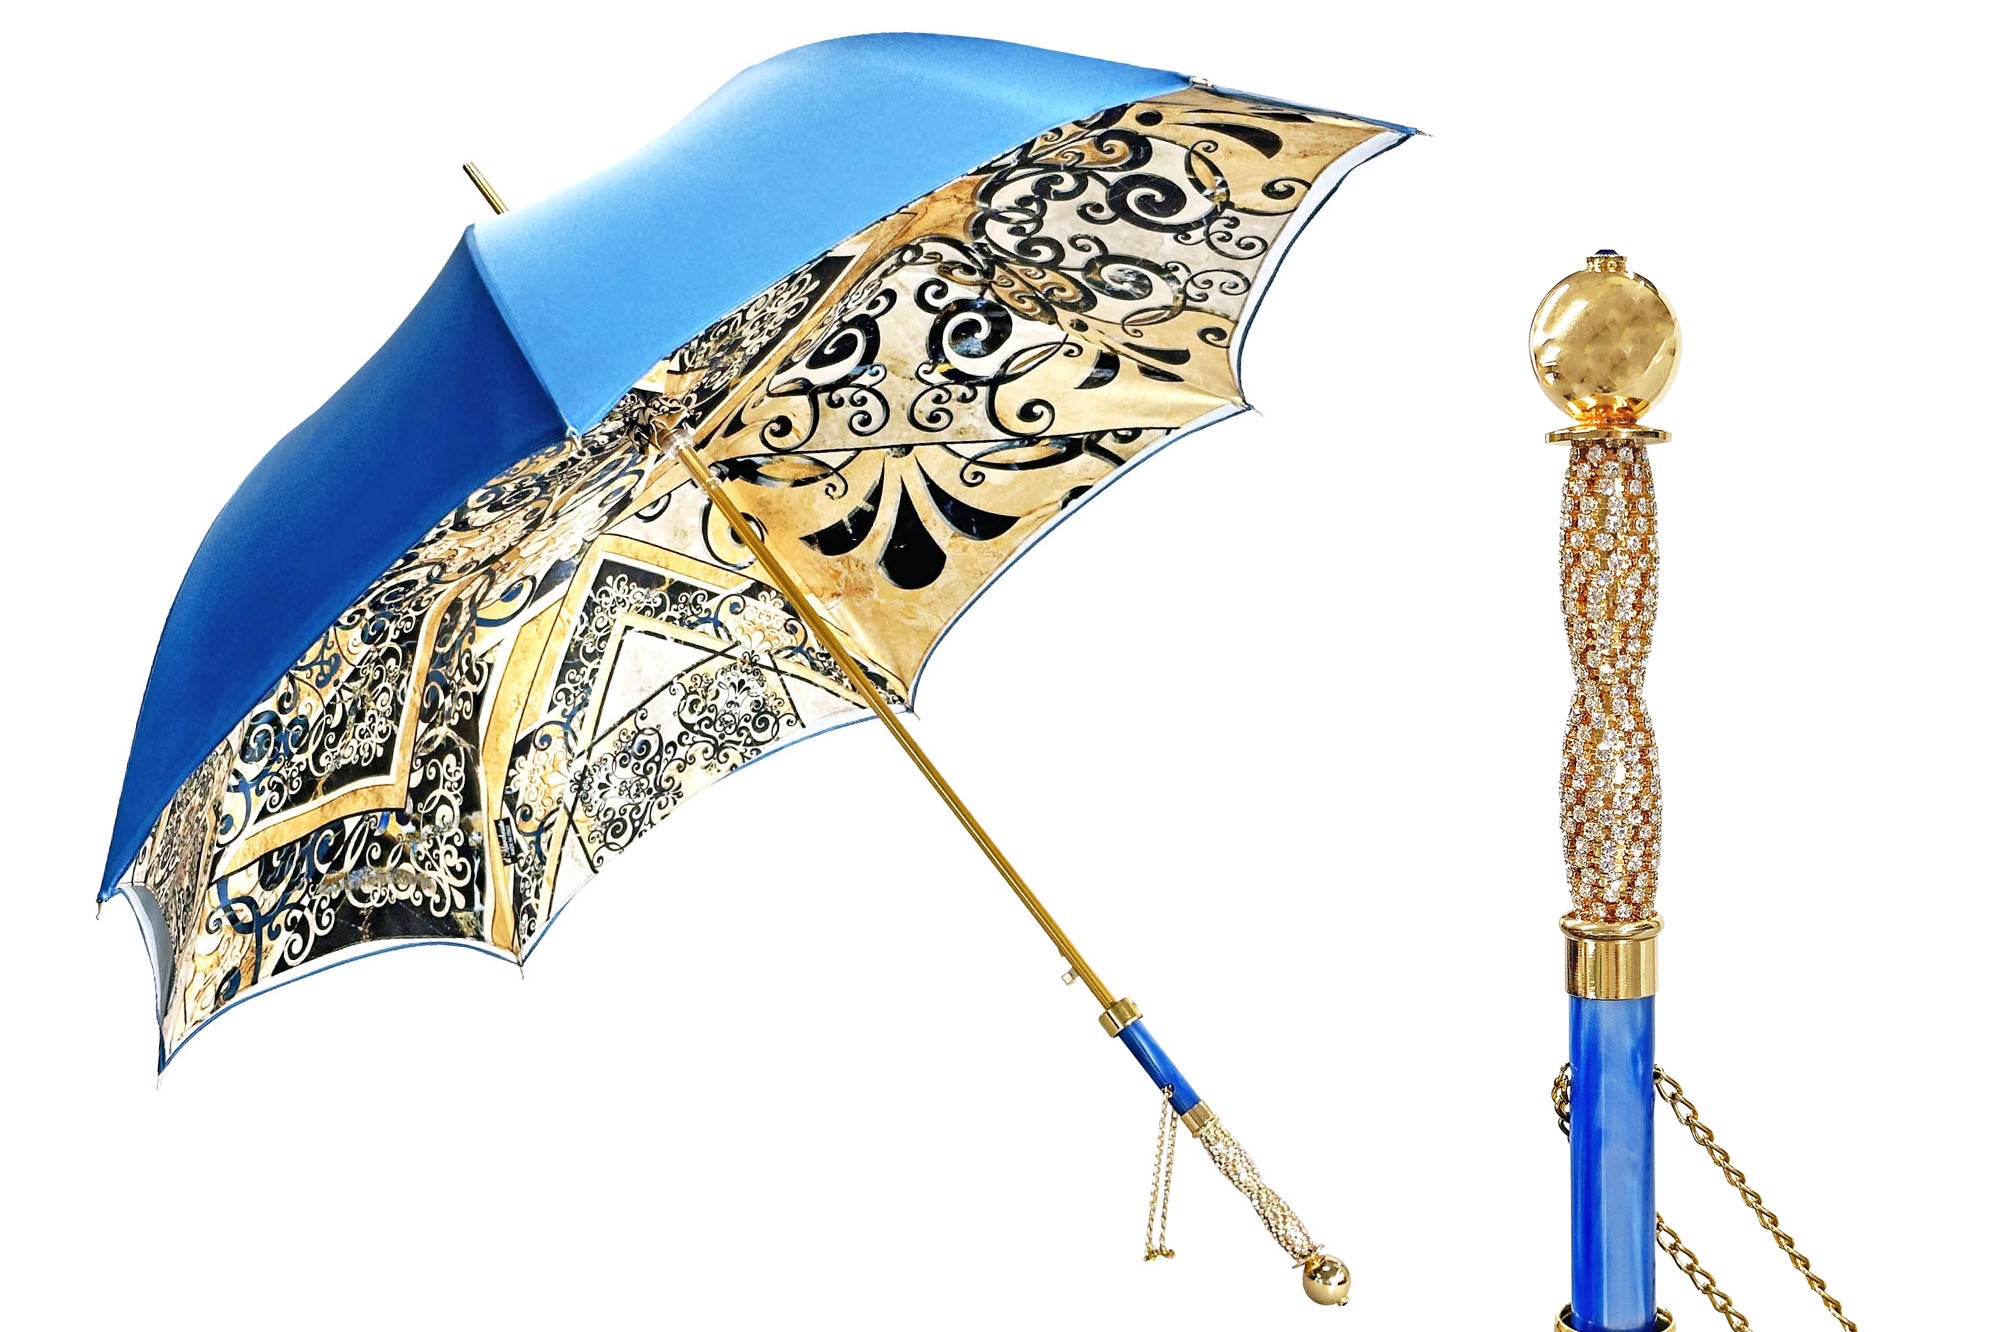 Handmade umbrella with exclusive Majolica design